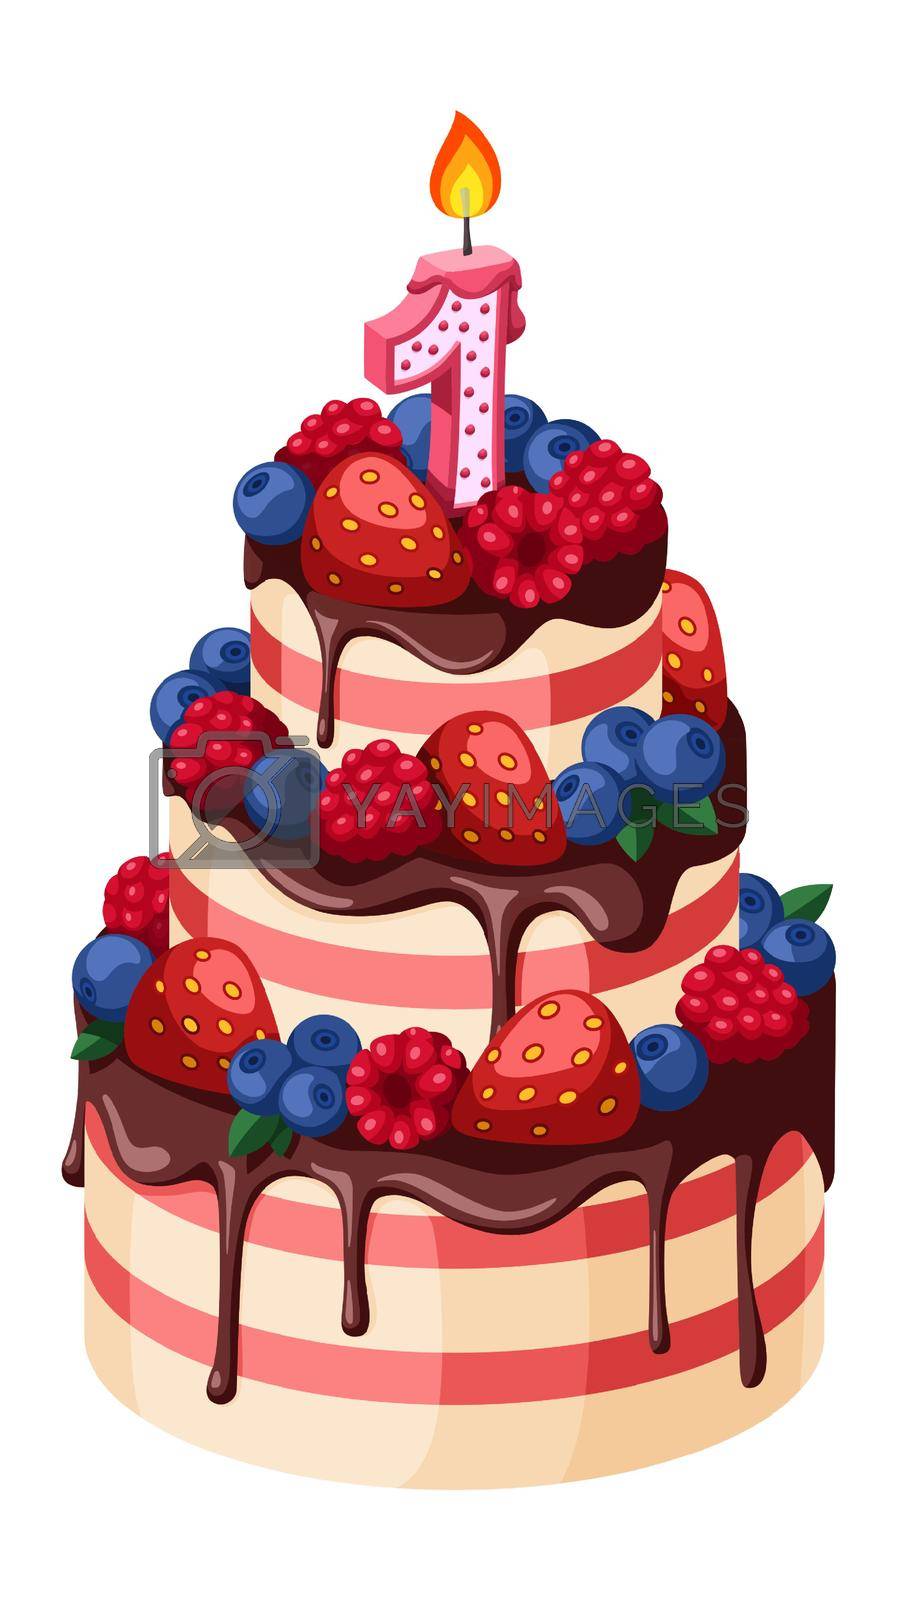 Royalty free image of First birthday cake. One year anniversary. Fruit chocolate dessert by LadadikArt